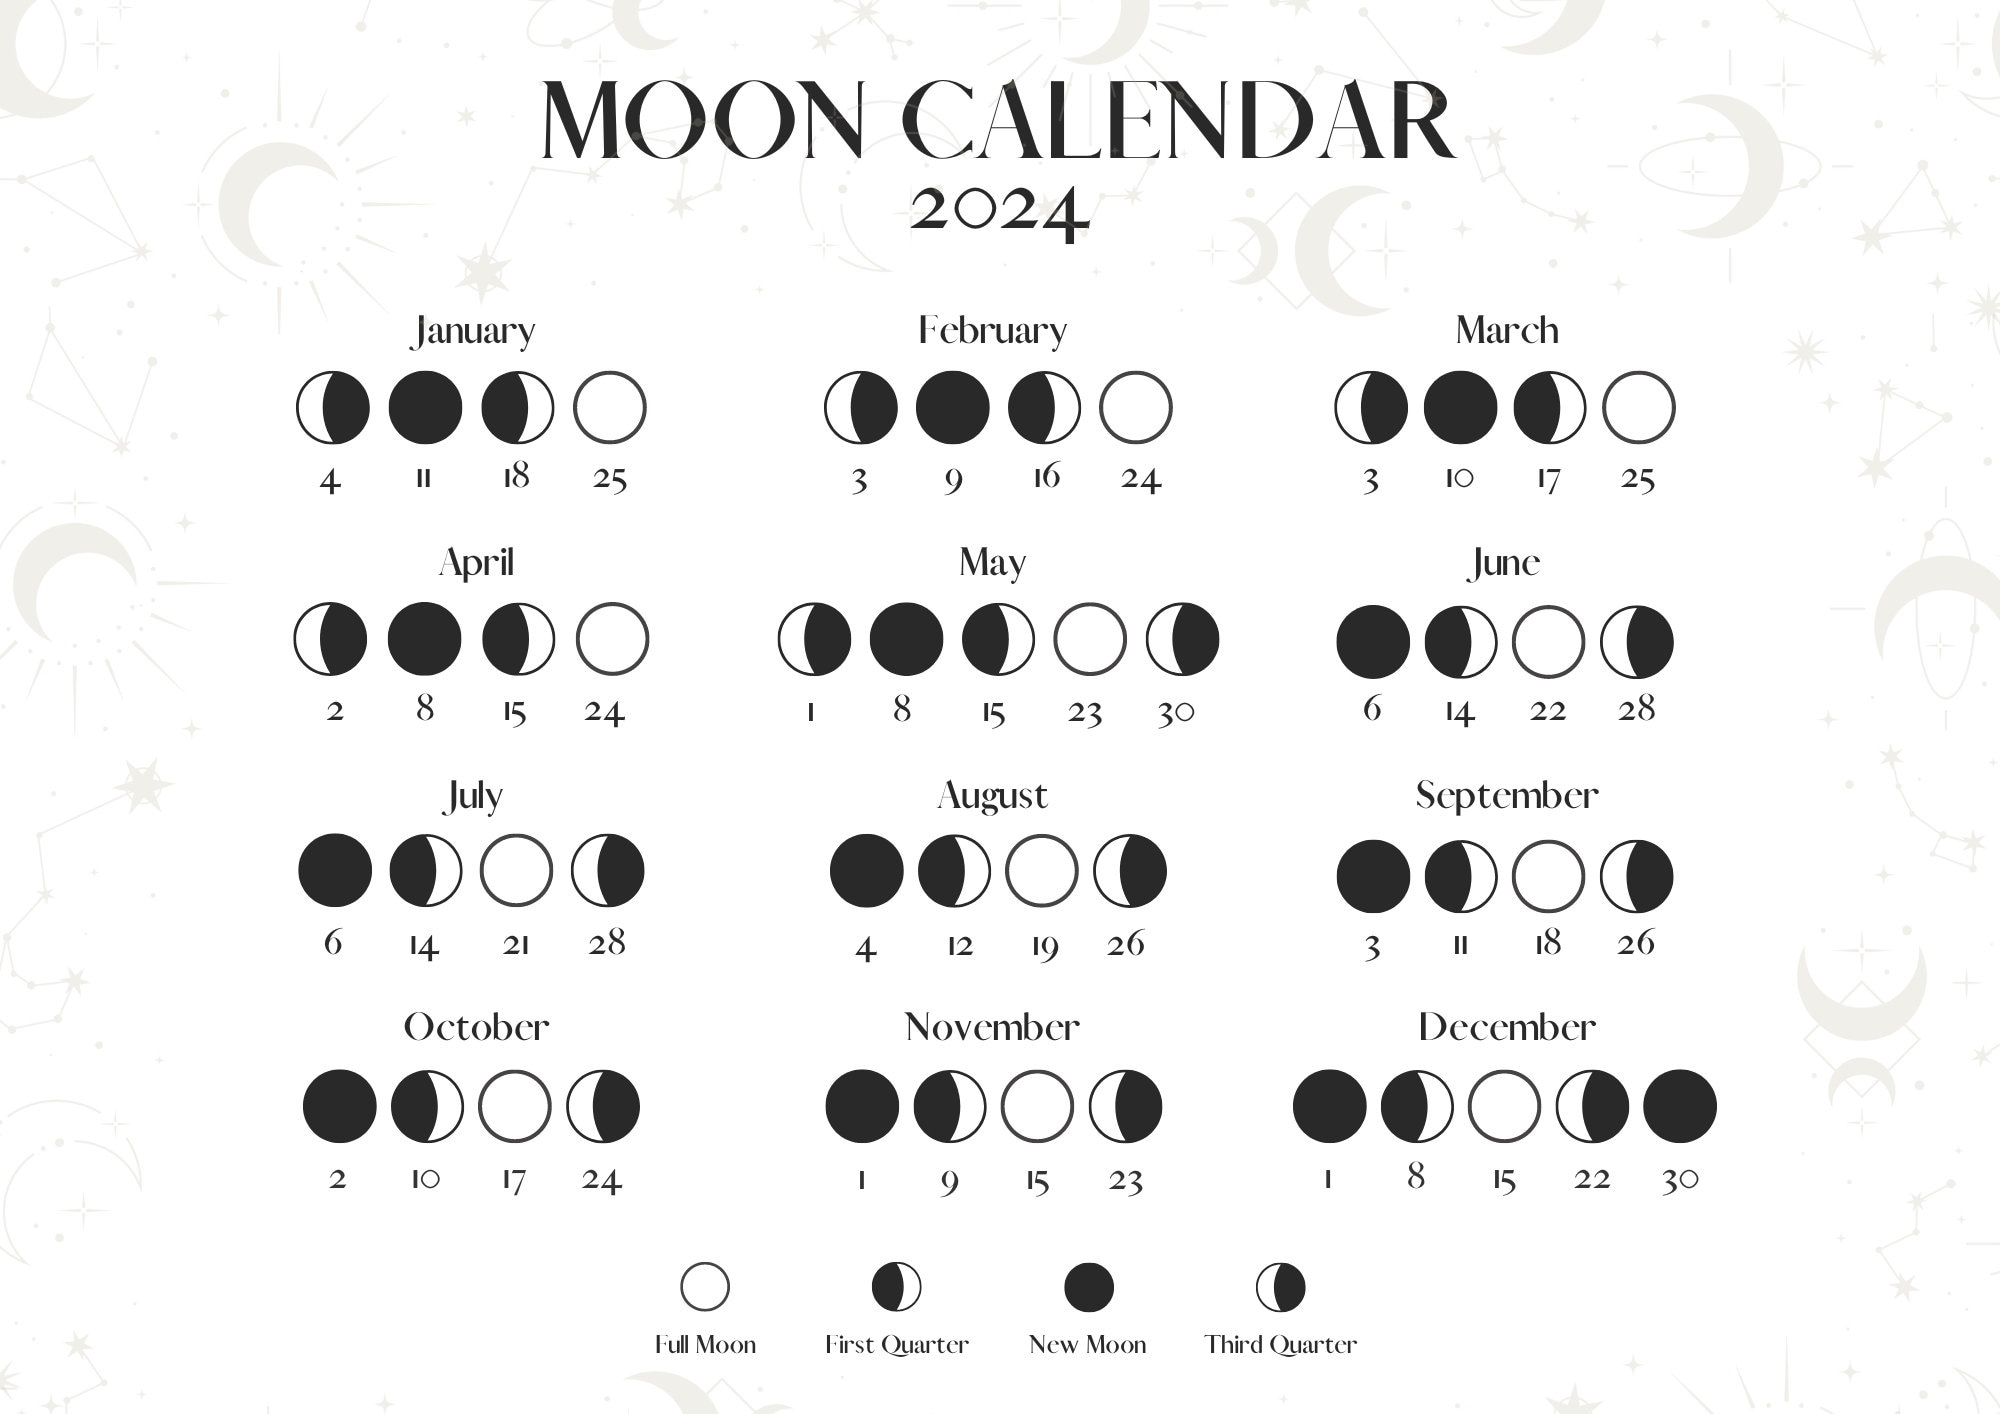 Moon Calendar 2024 Moon Phases Lunar Calendar Printable In A4 Size | Printable Chinese Calendar 2024